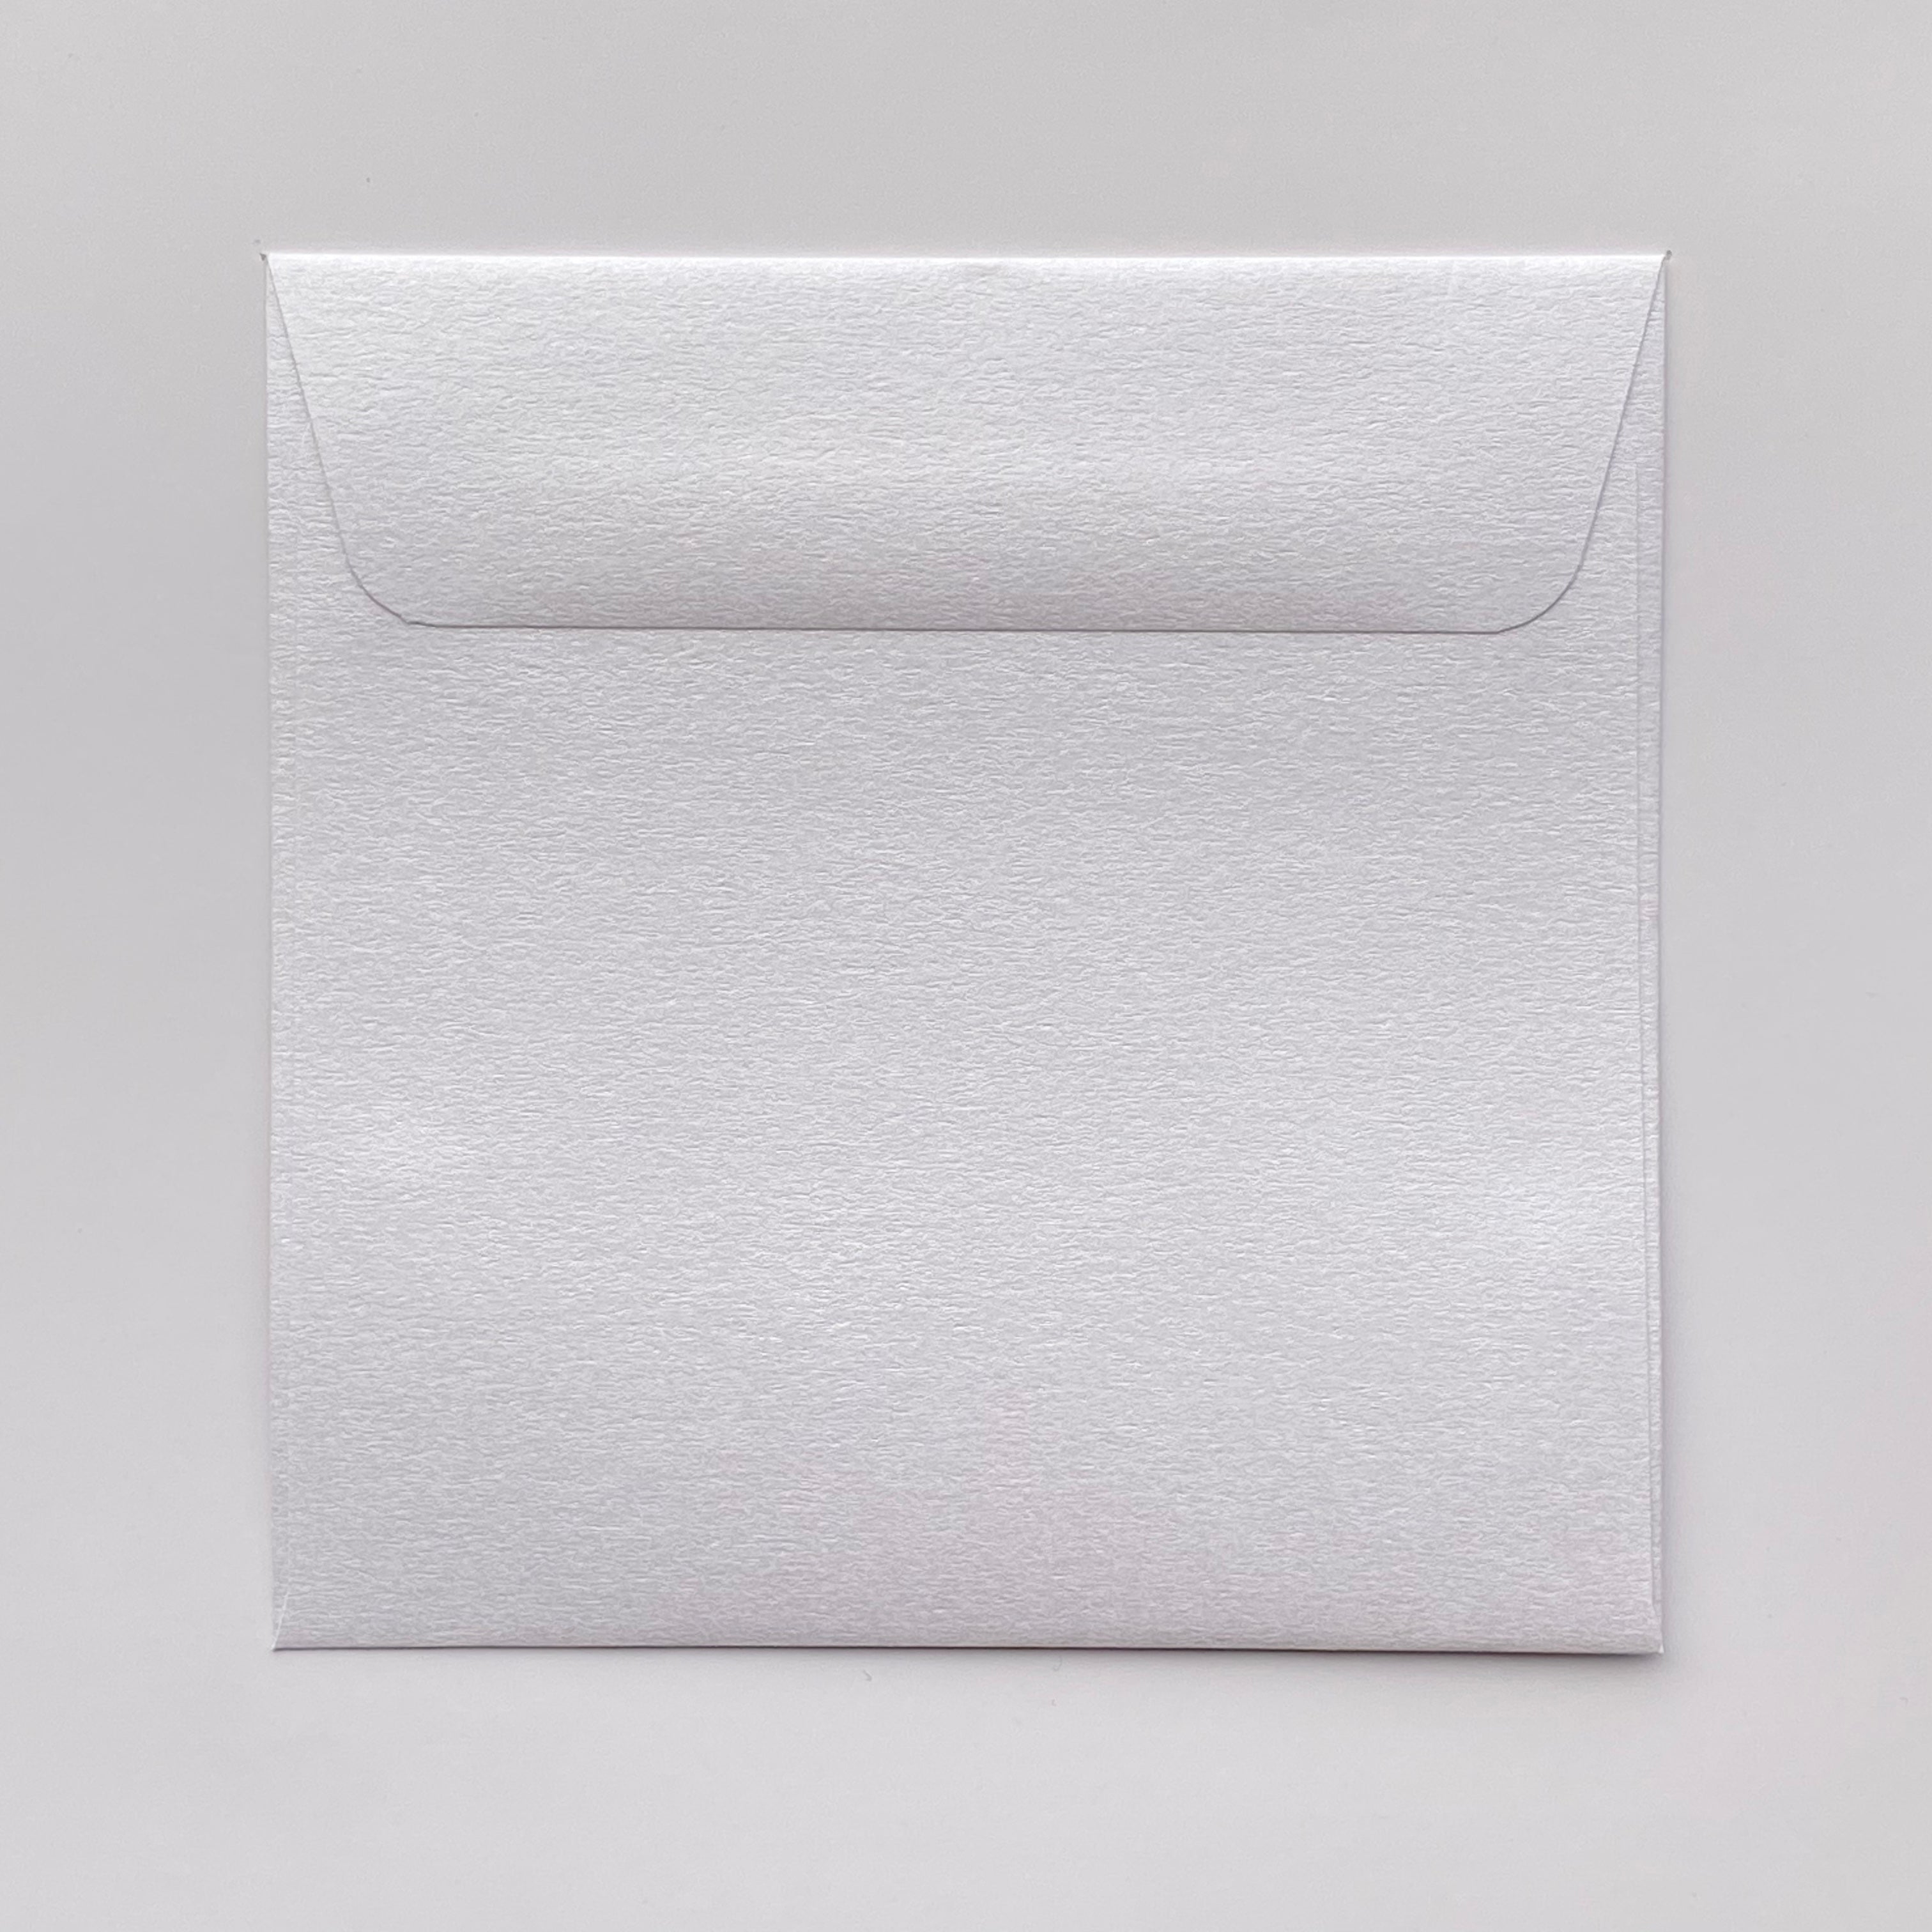 140mm square metallic envelopes